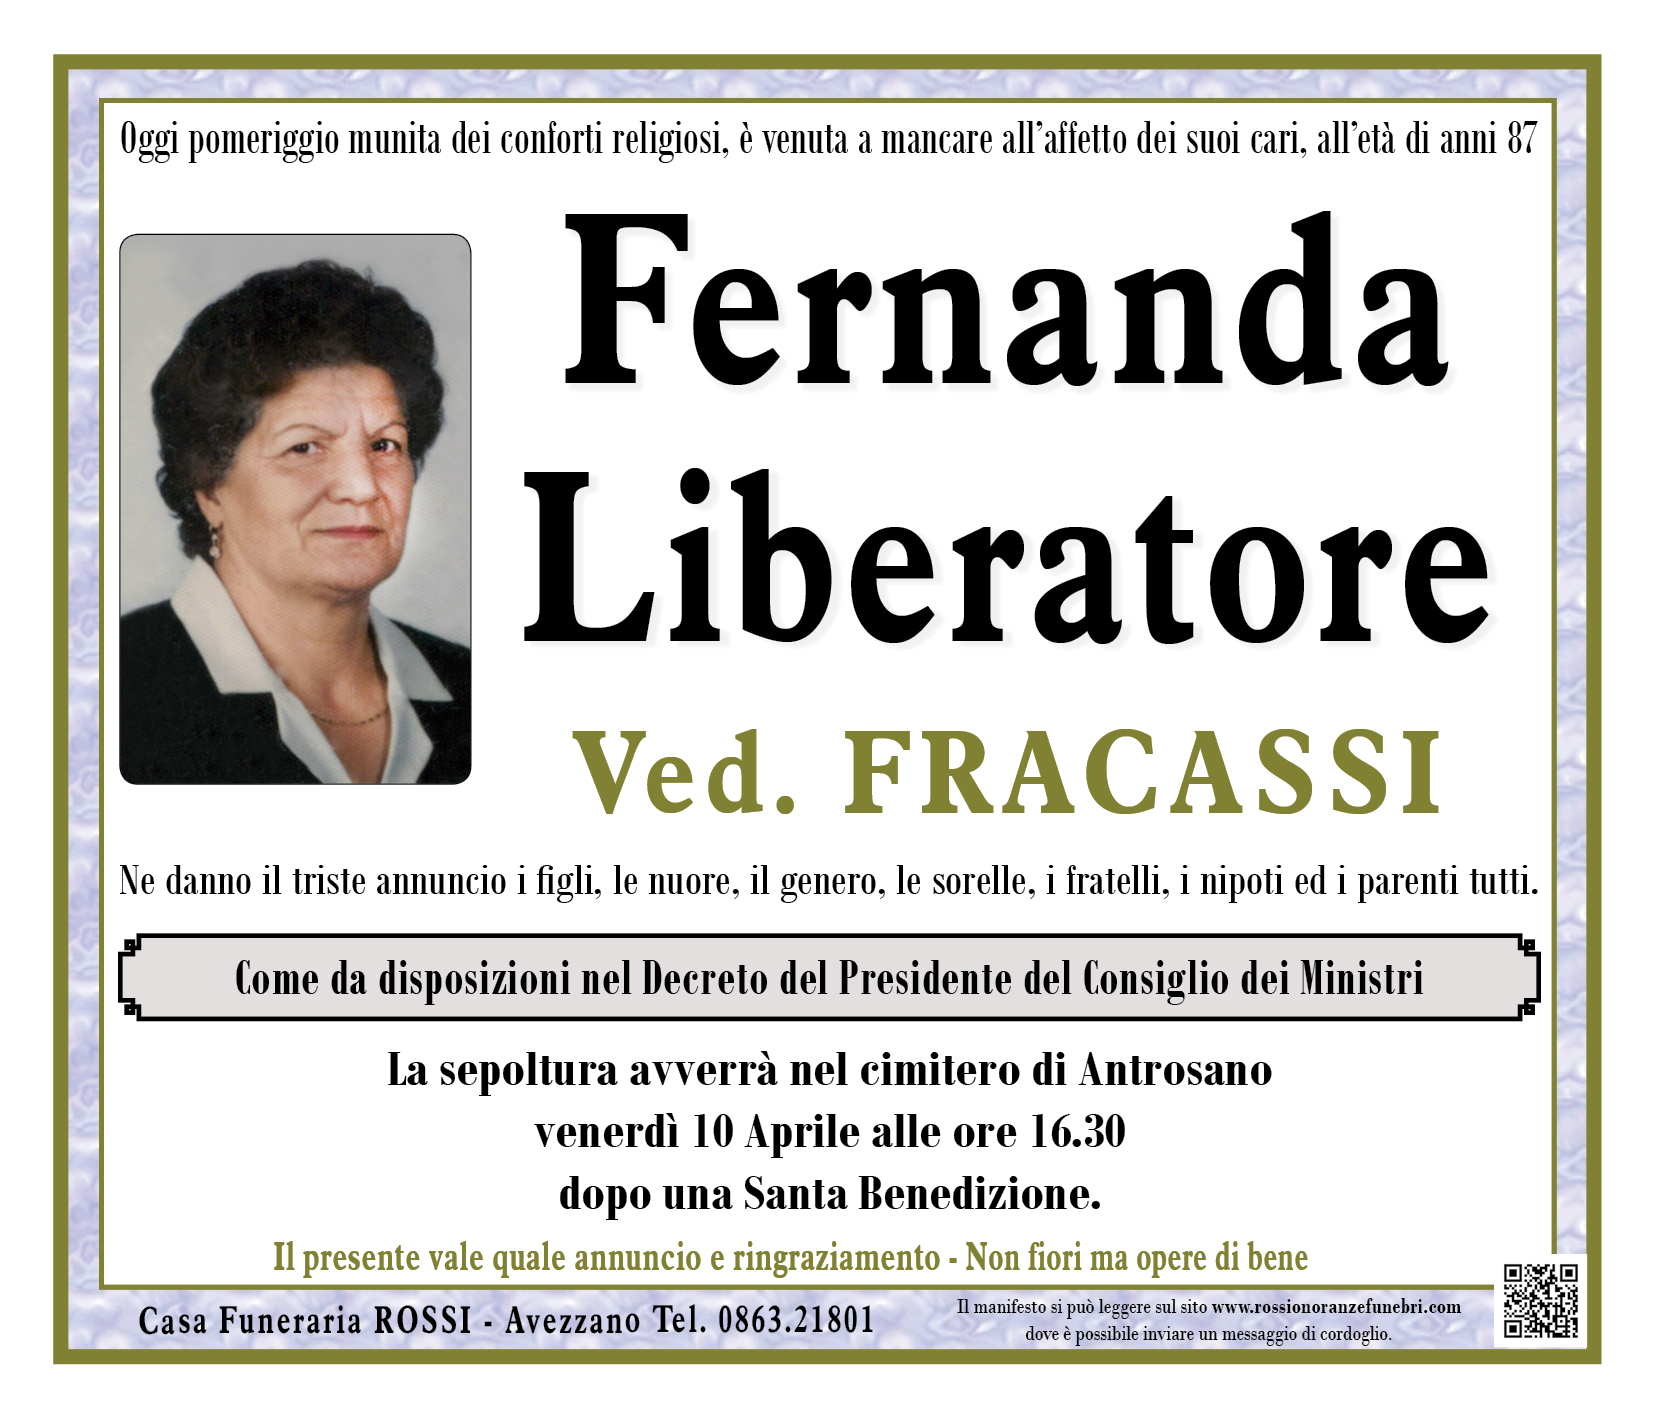 Fernanda Liberatore